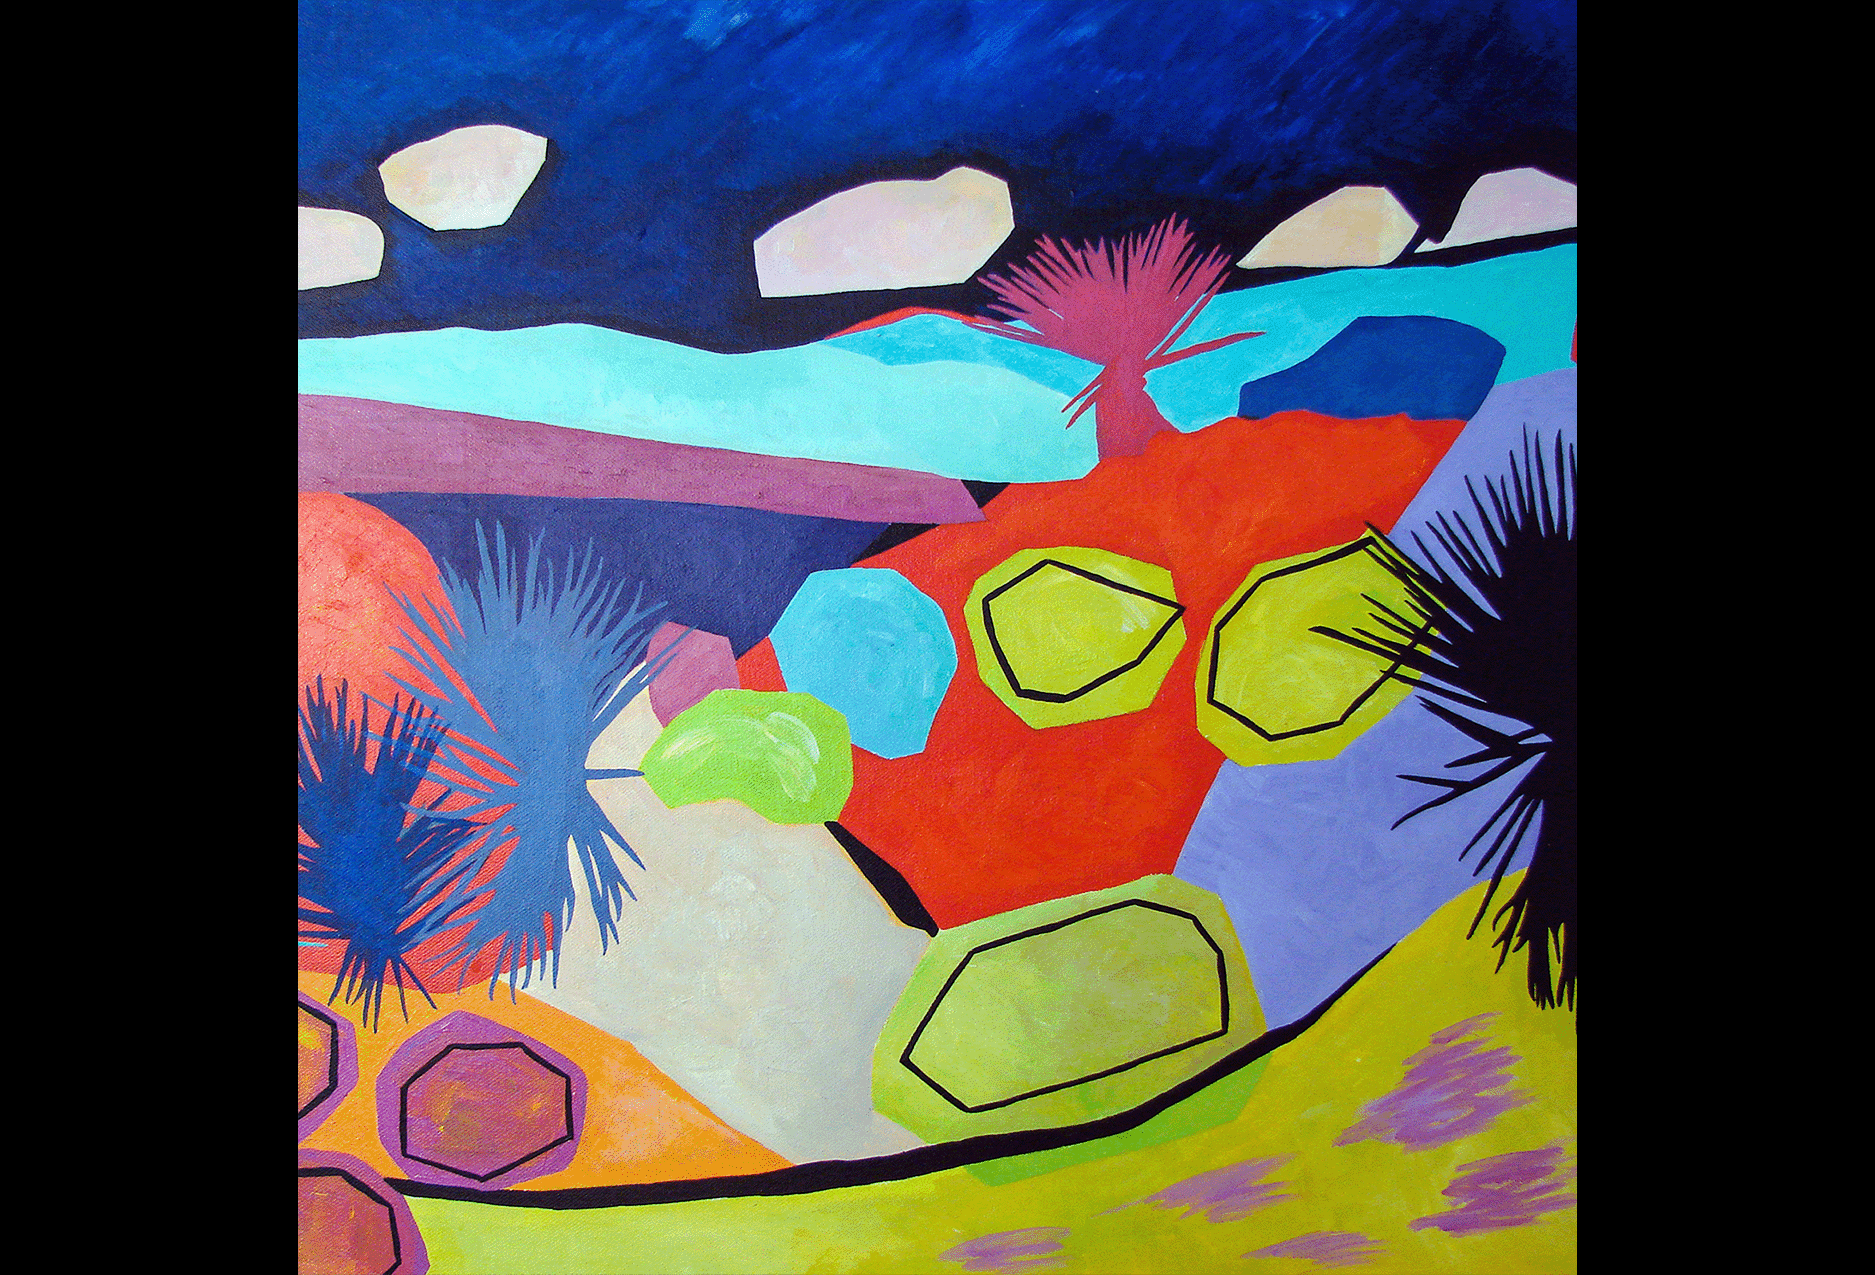 Painting on Canvas of a California Desert Scene